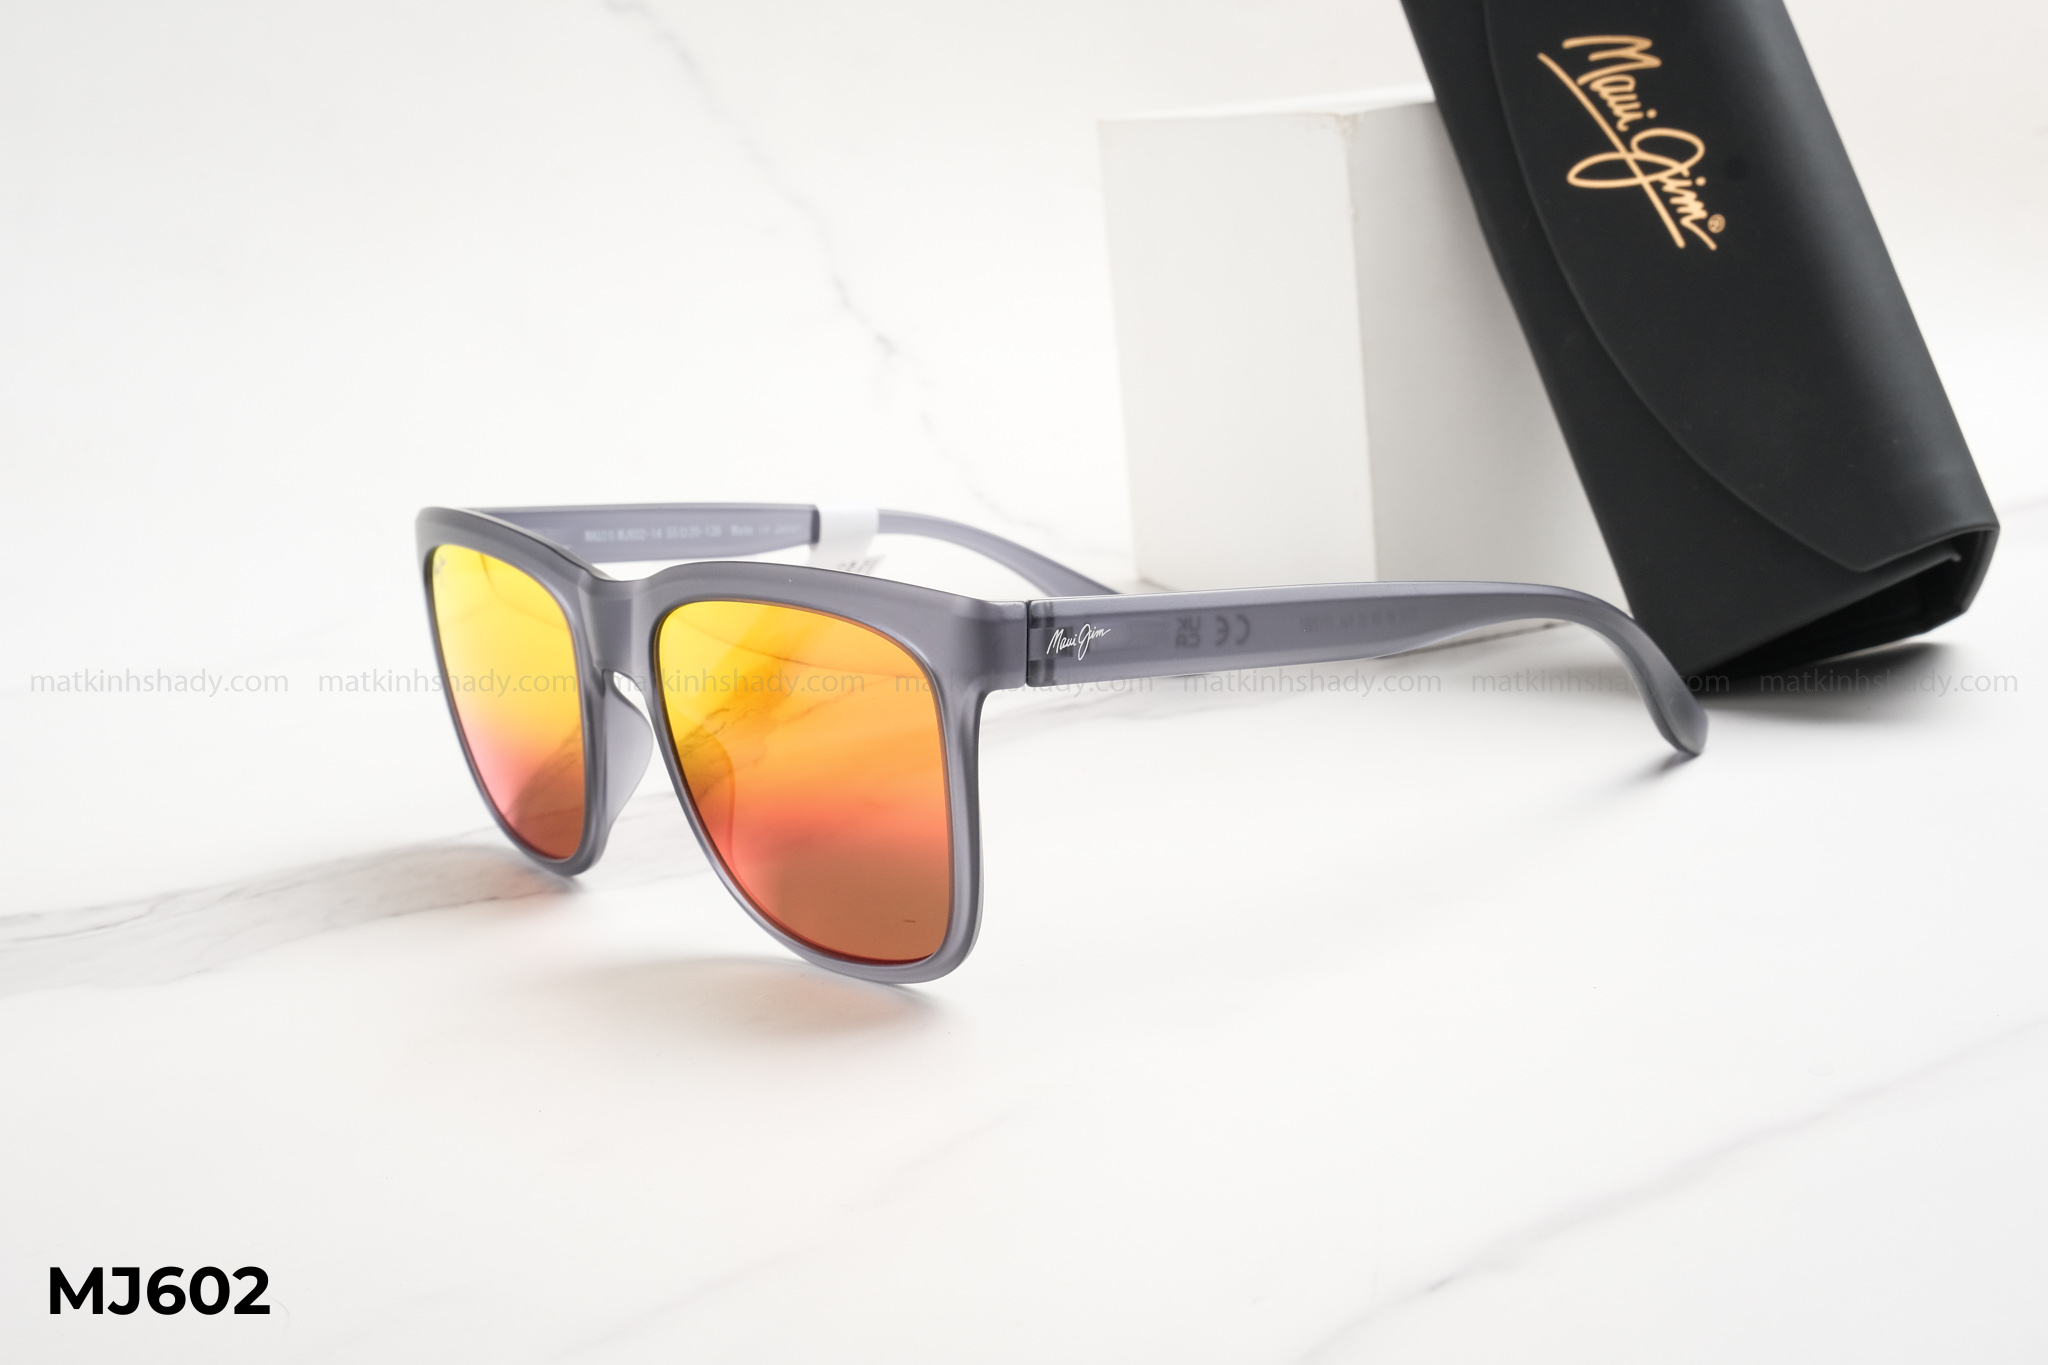  Maui Jim Eyewear - Sunglasses - MJ602 